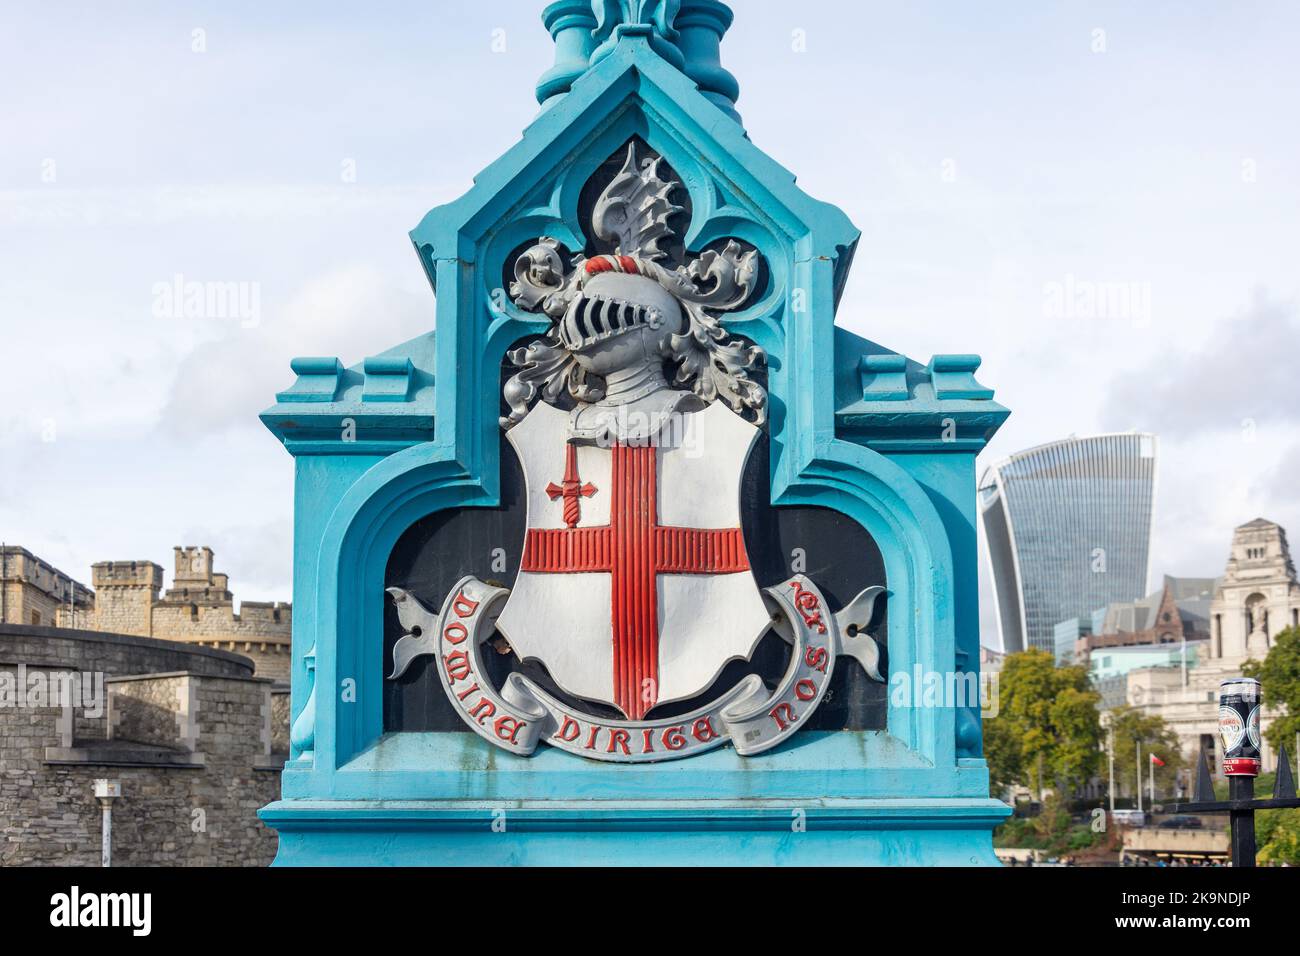 Armoiries sur la lampe Tower Bridge, approche Tower Bridge, Tower Hill, London Borough of Tower Hamlets, Greater London, Angleterre, Royaume-Uni Banque D'Images